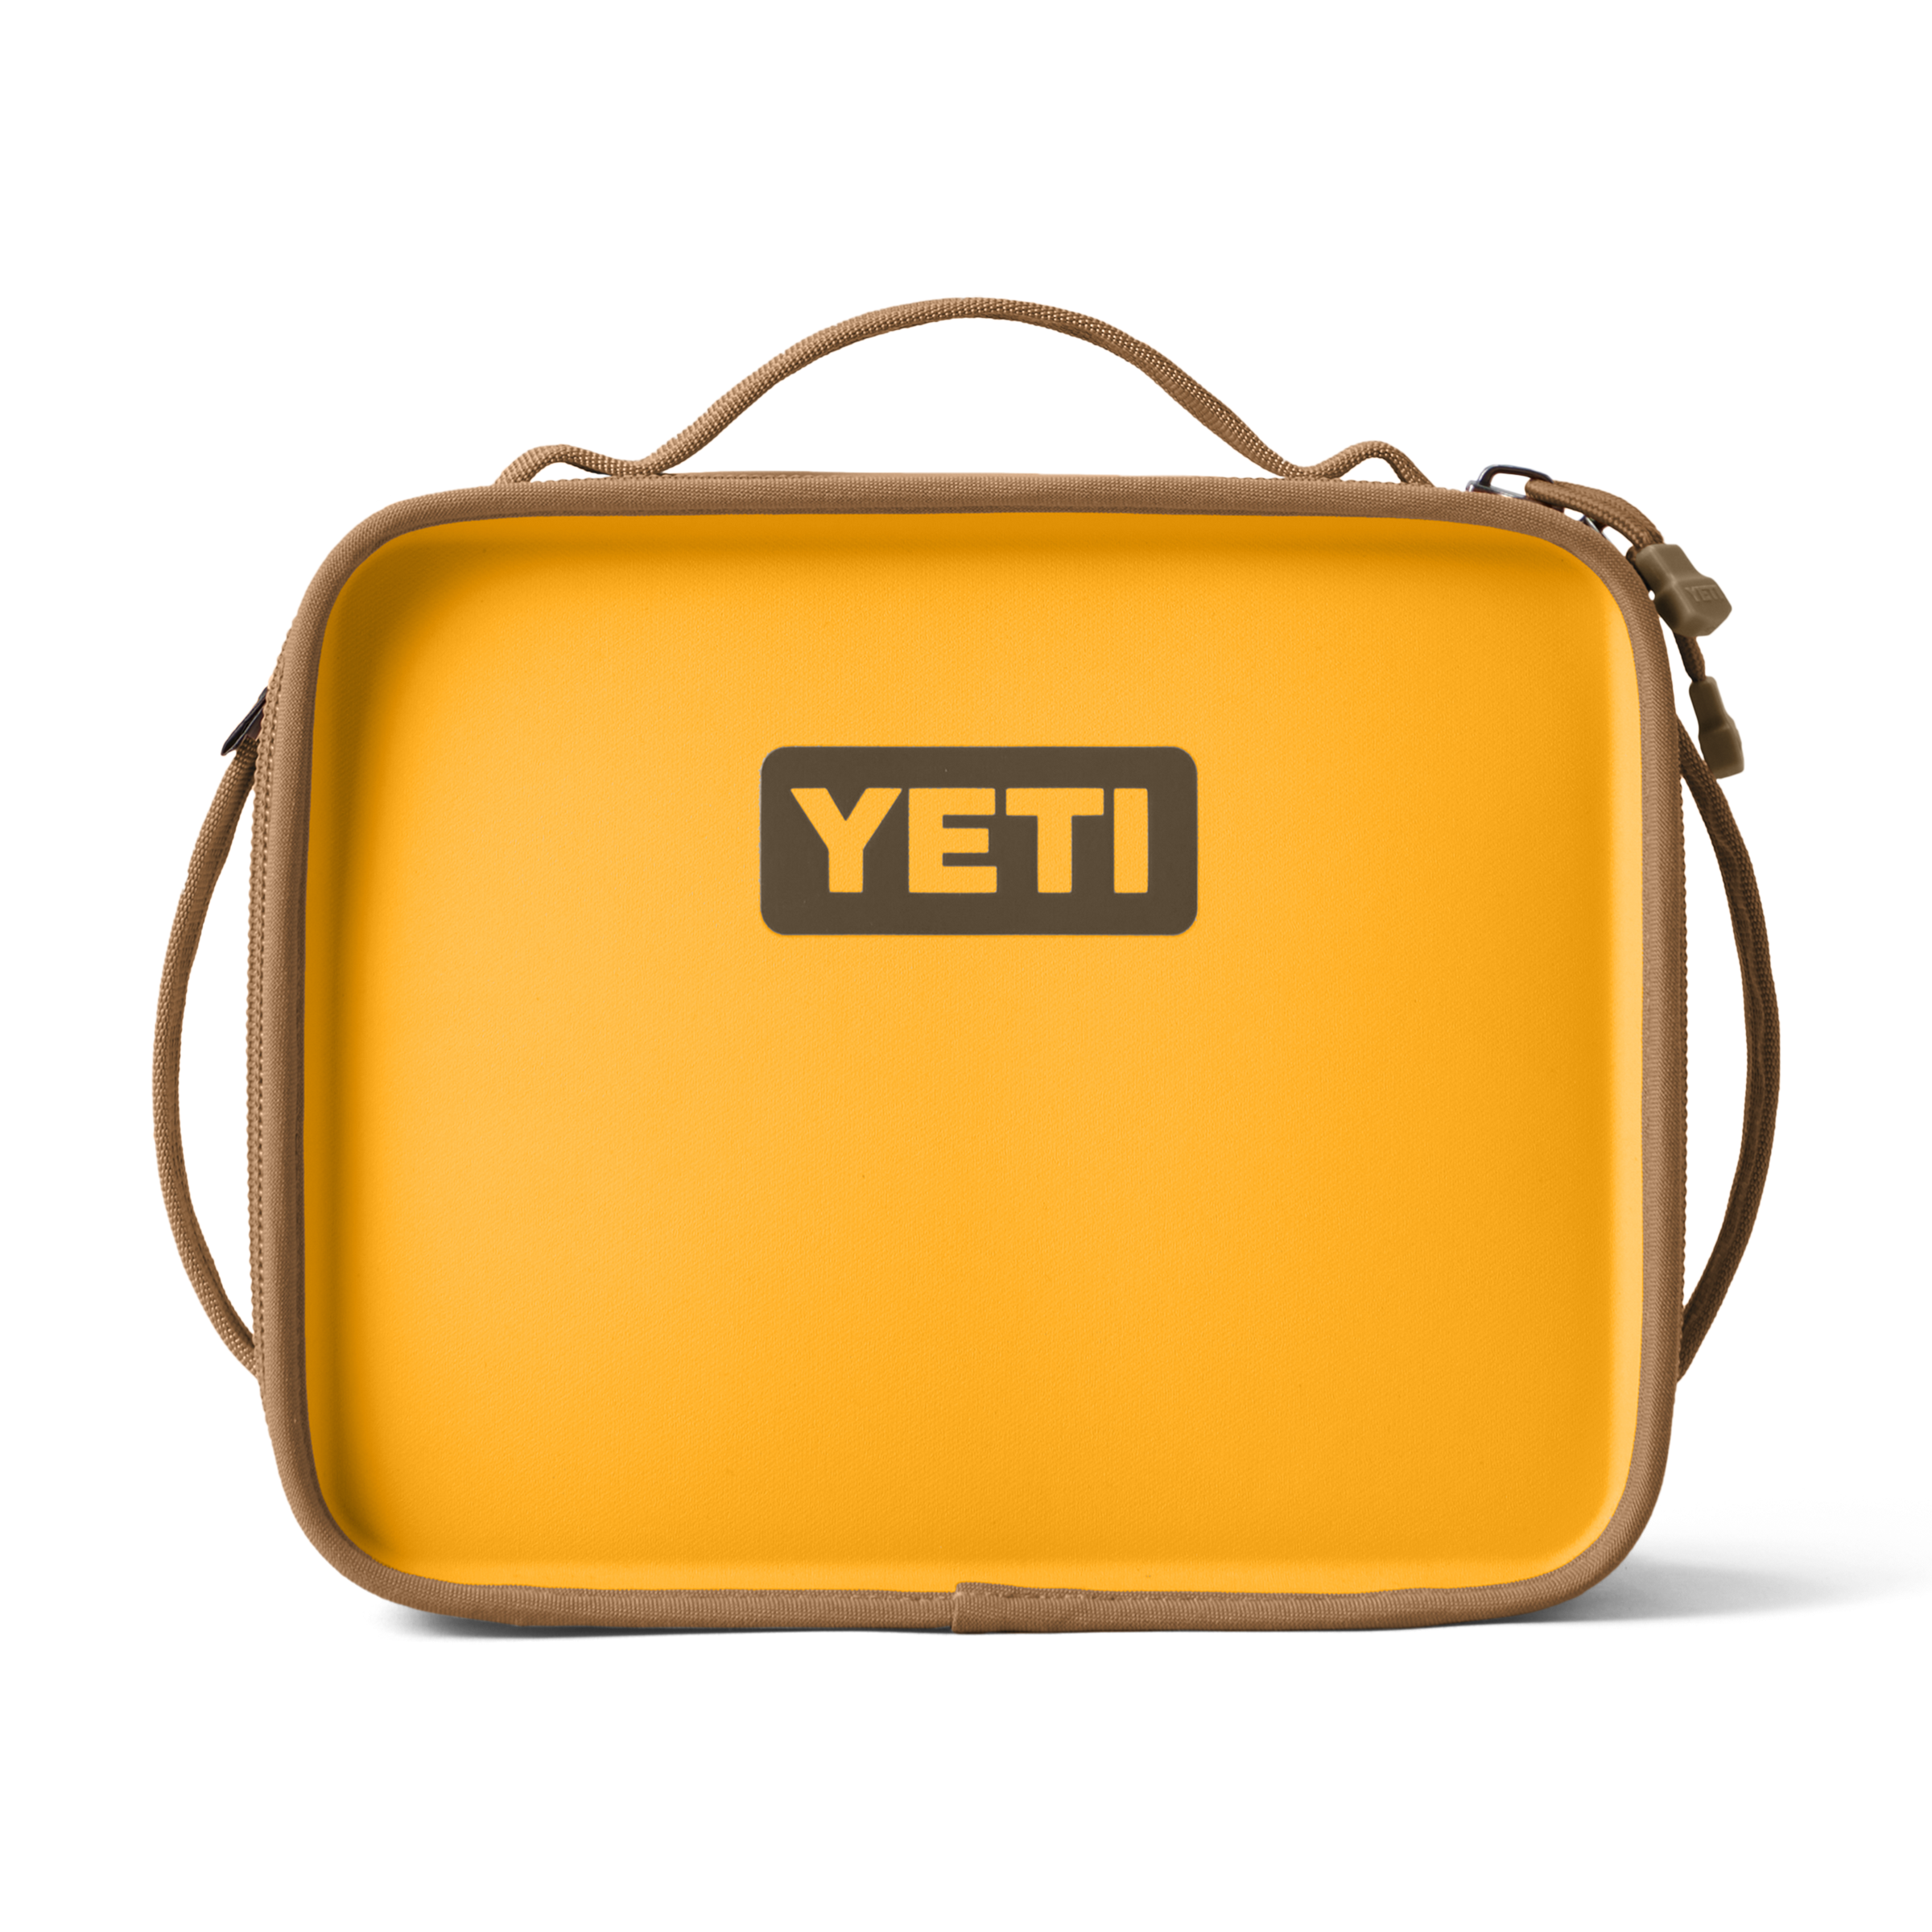 YETI / Daytrip Lunch Box - Navy